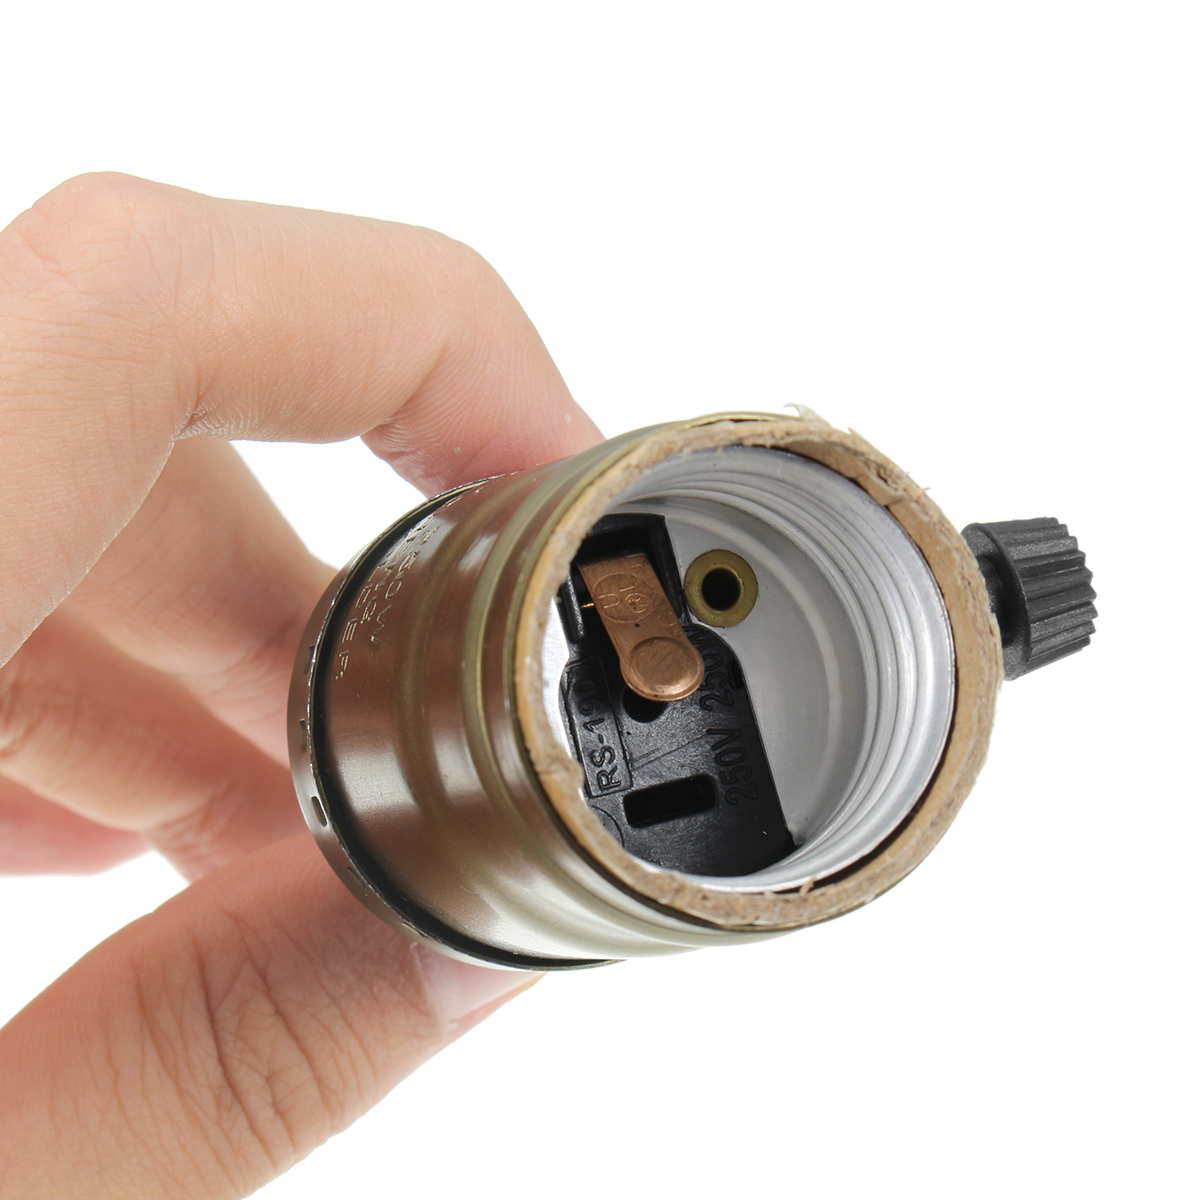 E27-4M-Vintage-Copper-Bulb-Adapter-Base-Socket-Lamp-Holder-with-Dimmer-Switch-US-Plug-1287282-5